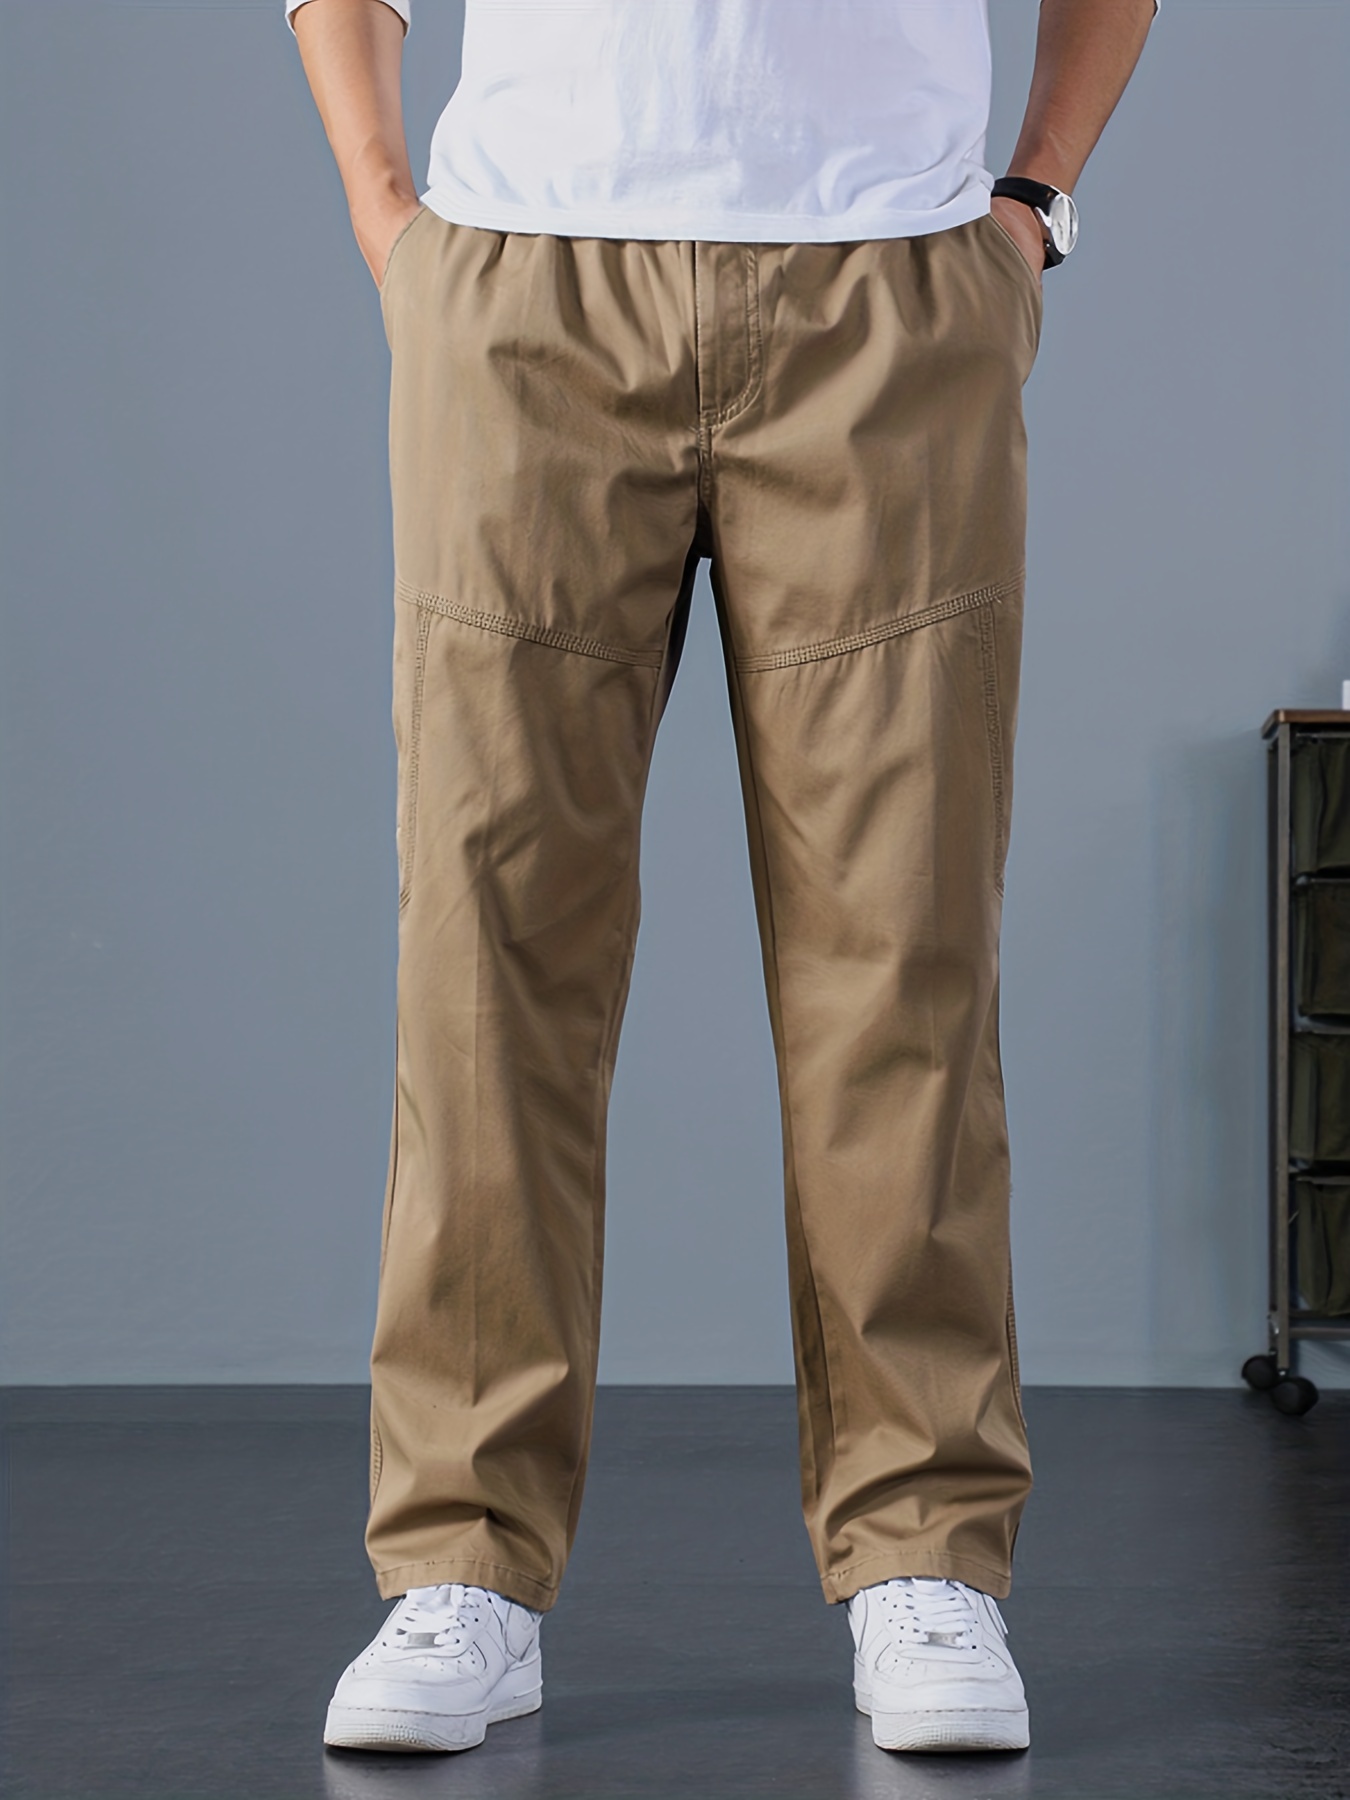 Stretching Tactical Explorer Pants : Relwen M-51 Commando Cargo Pants